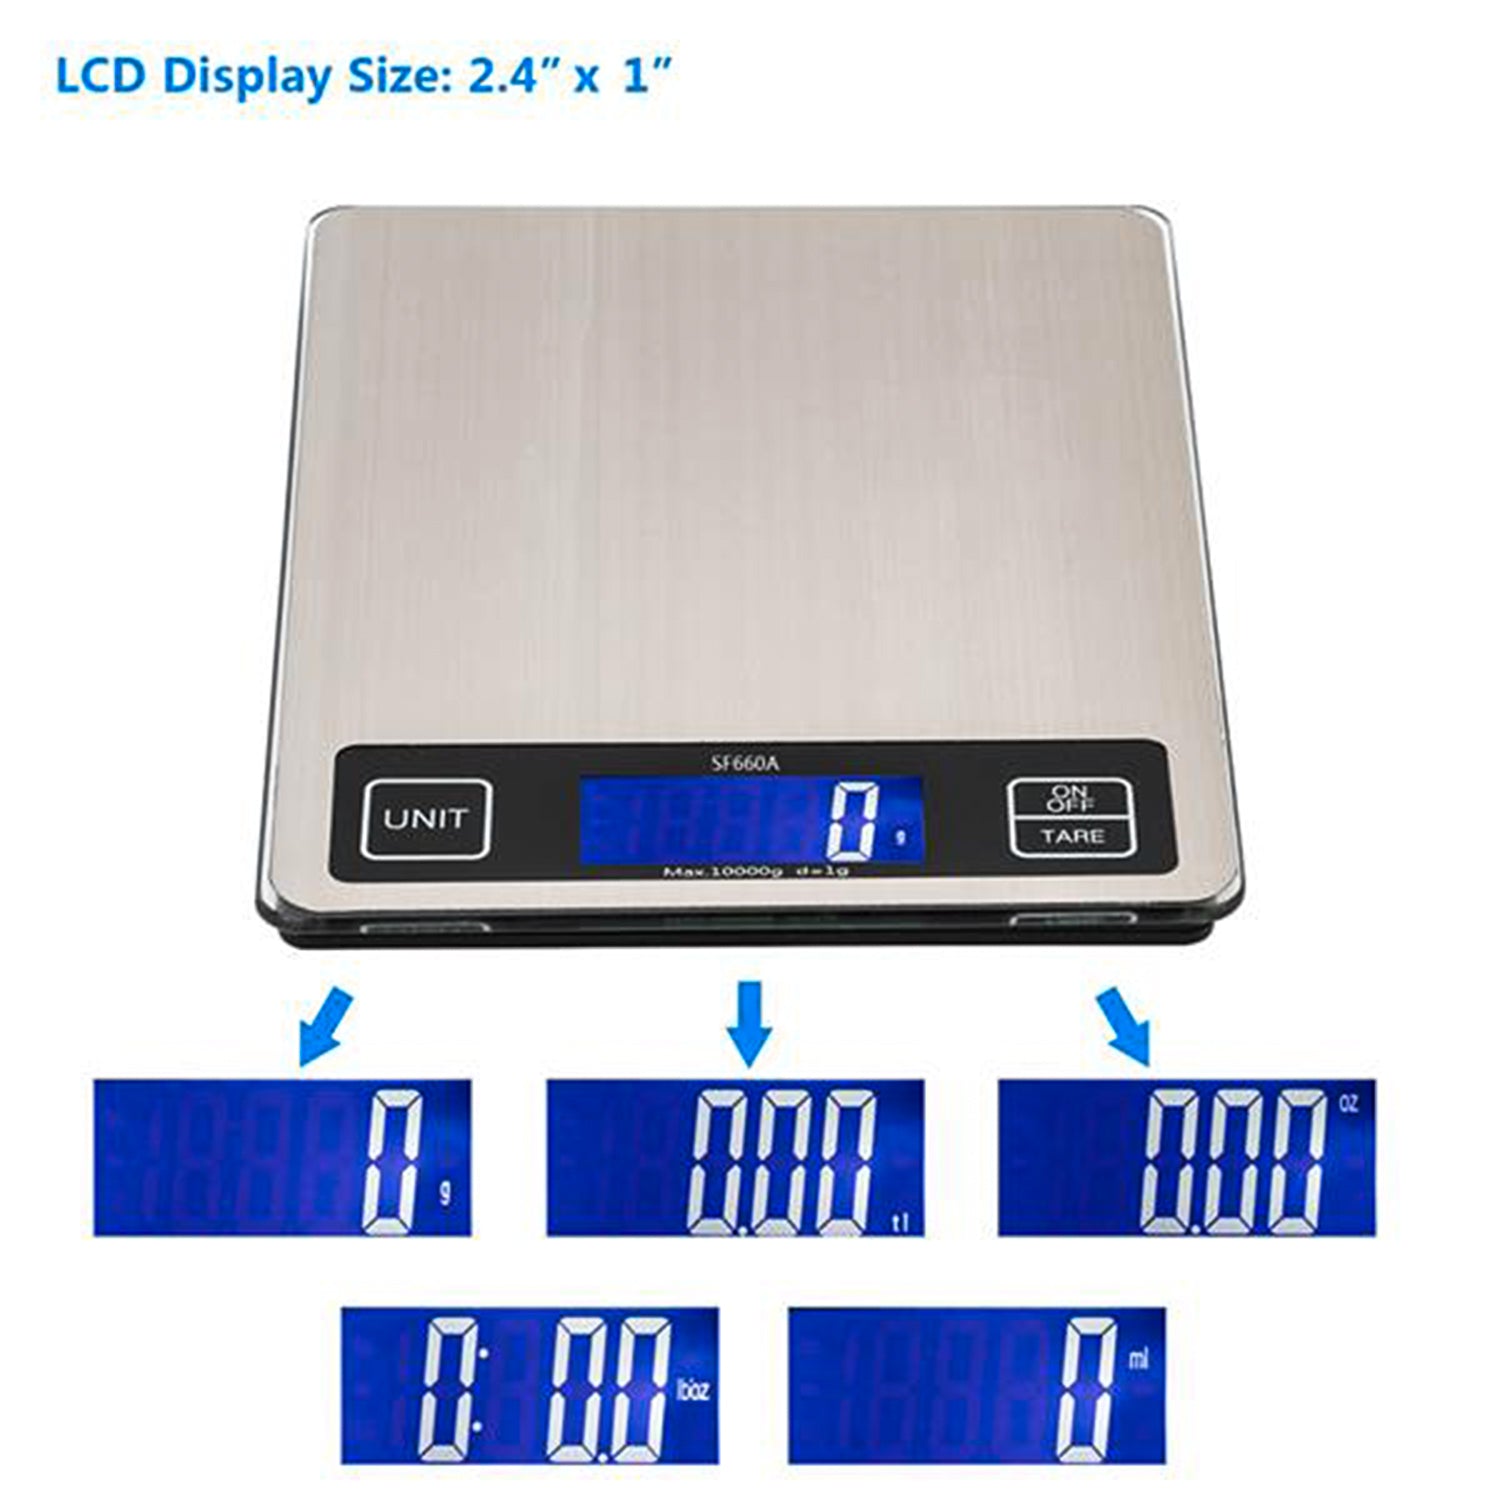 Food Kitchen Scale Digital Kitchen Scal E 5kg/10kgStainless Steel